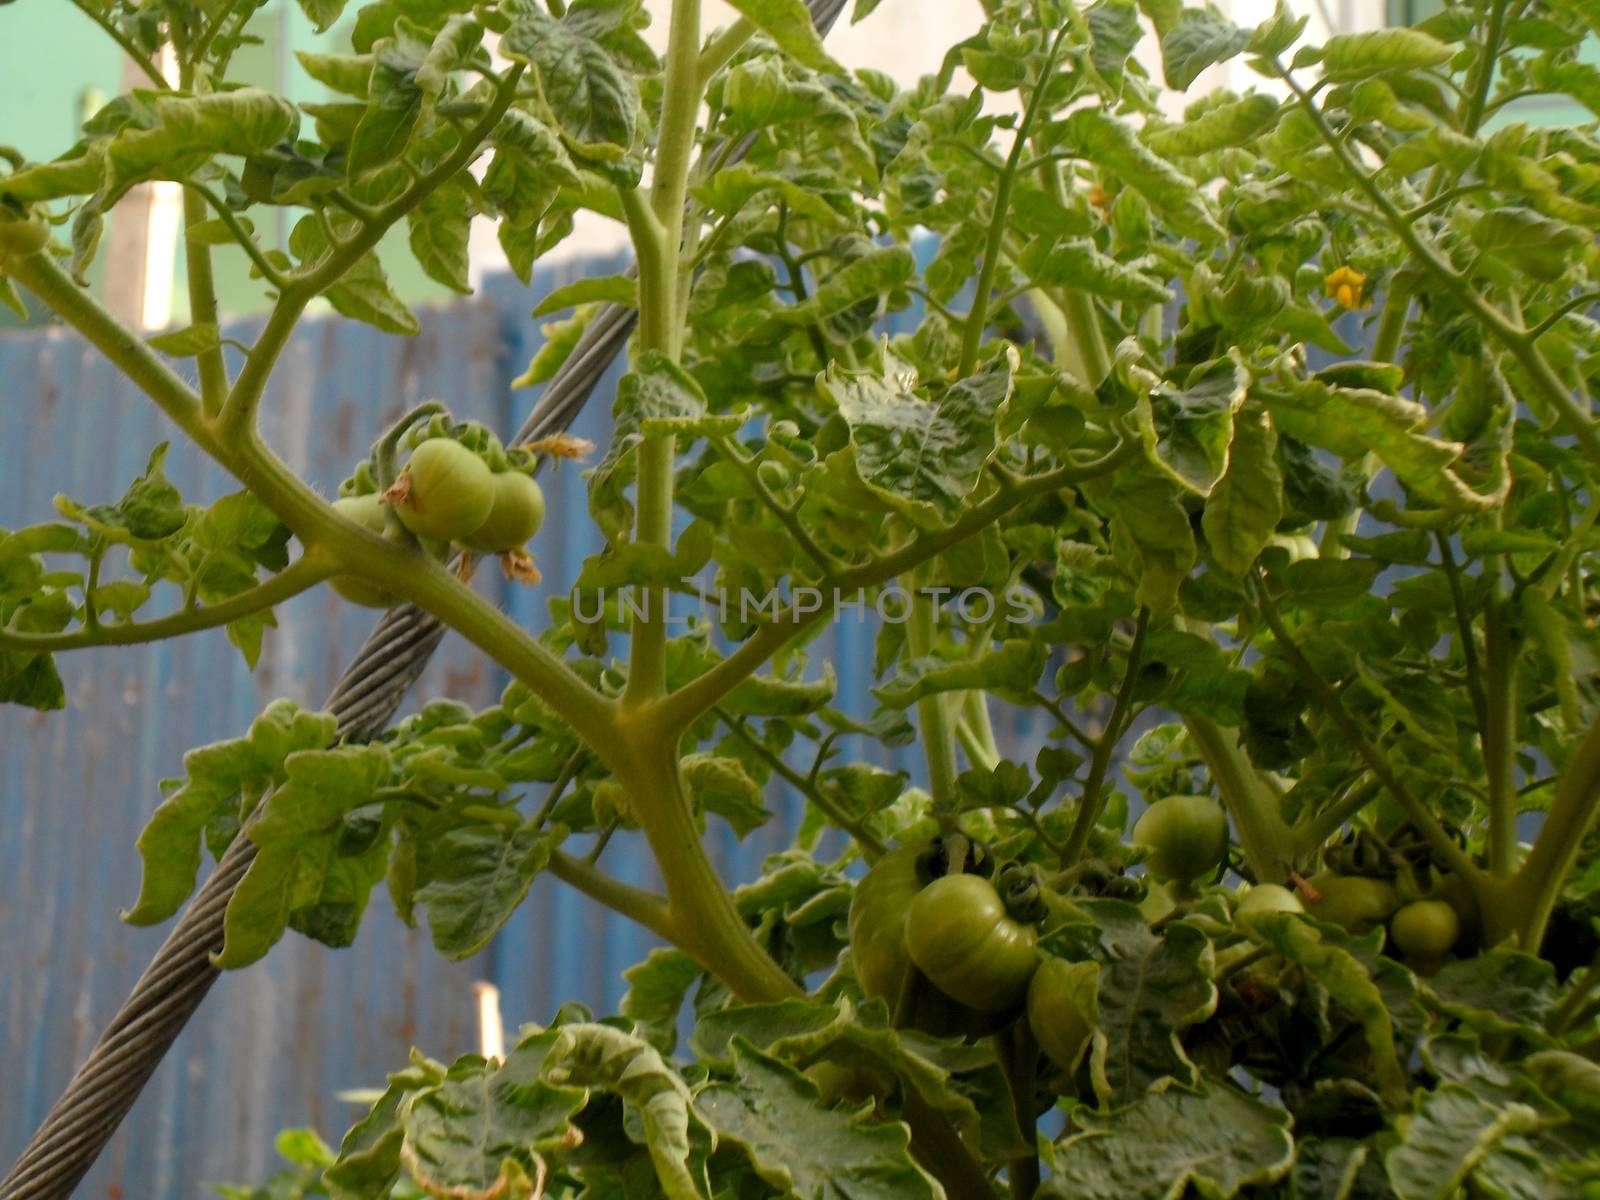 Unripe tomatoes in a garden by shawlinmohd